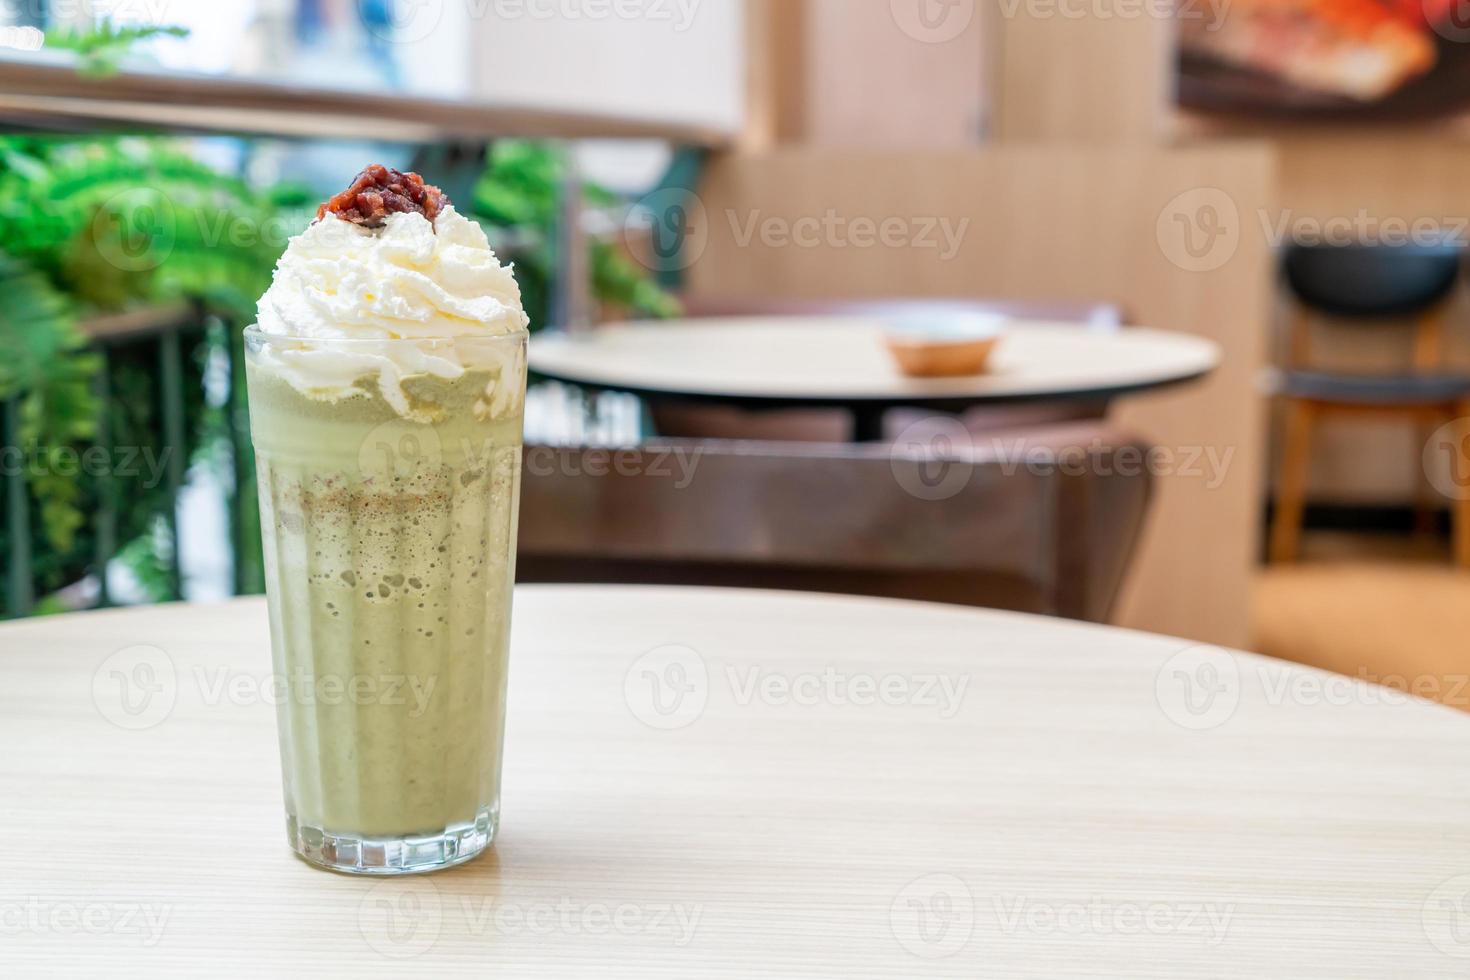 matcha groene thee latte vermengd met slagroom en rode boon in coffeeshop café en restaurant foto